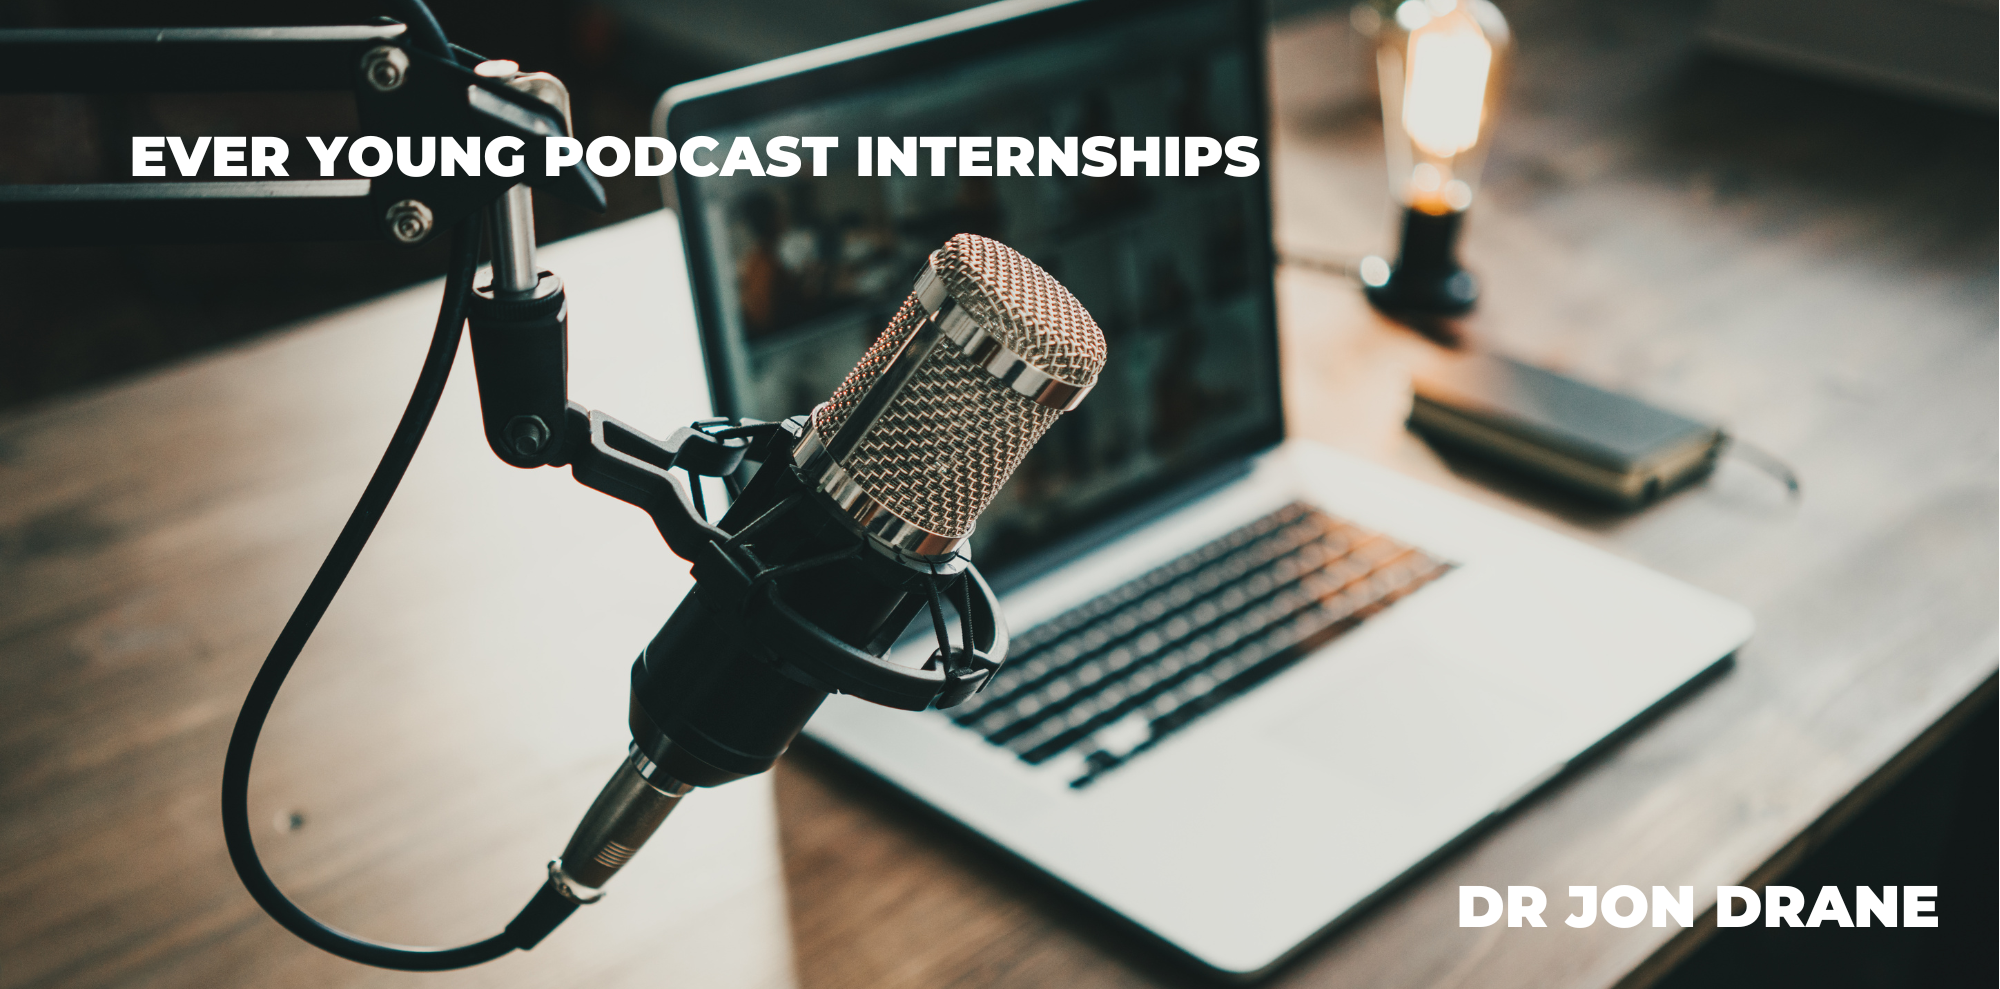 Podcast training internships, Creative arts internships, podcast internships, internships, Dr Jon Drane